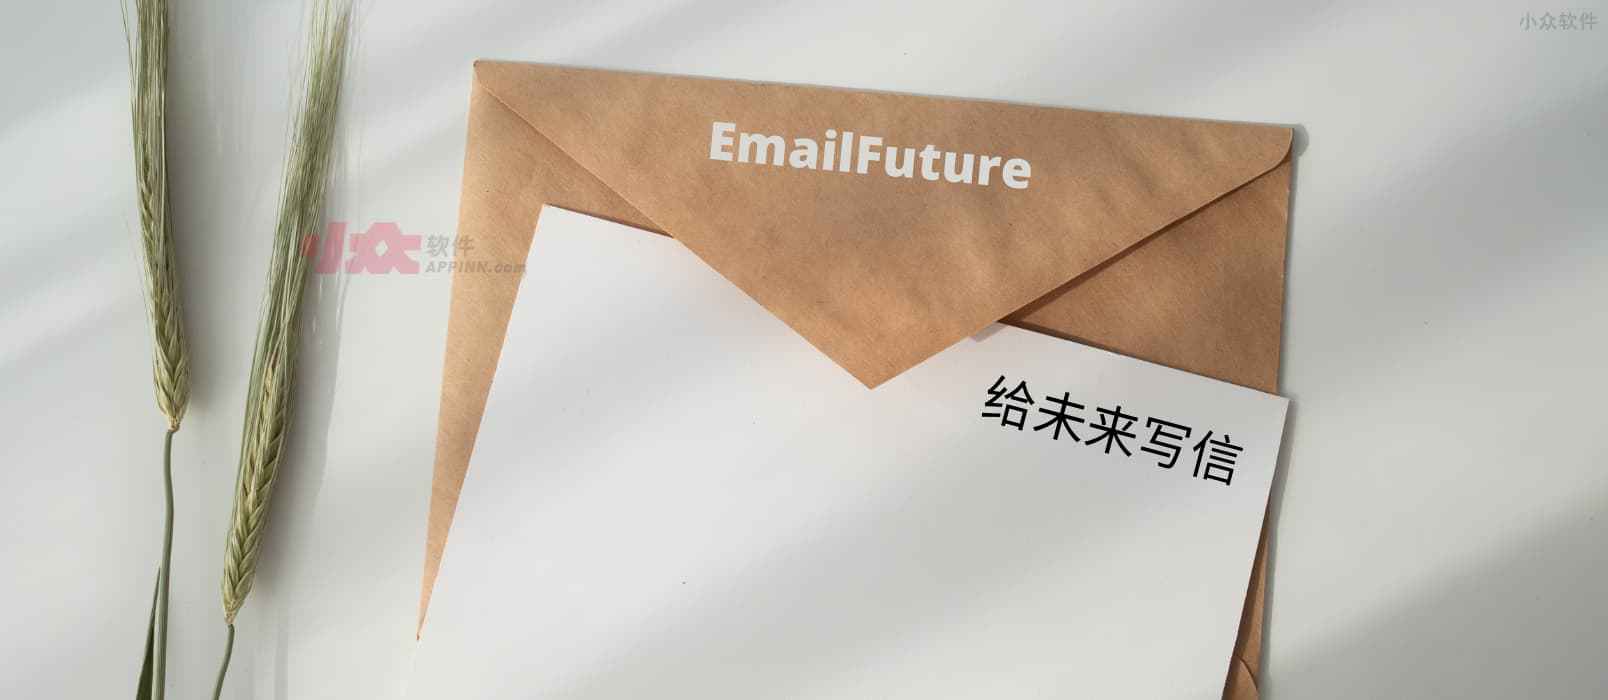 EmailFuture - 给未来的自己或他人写信，出其不意的惊喜 1